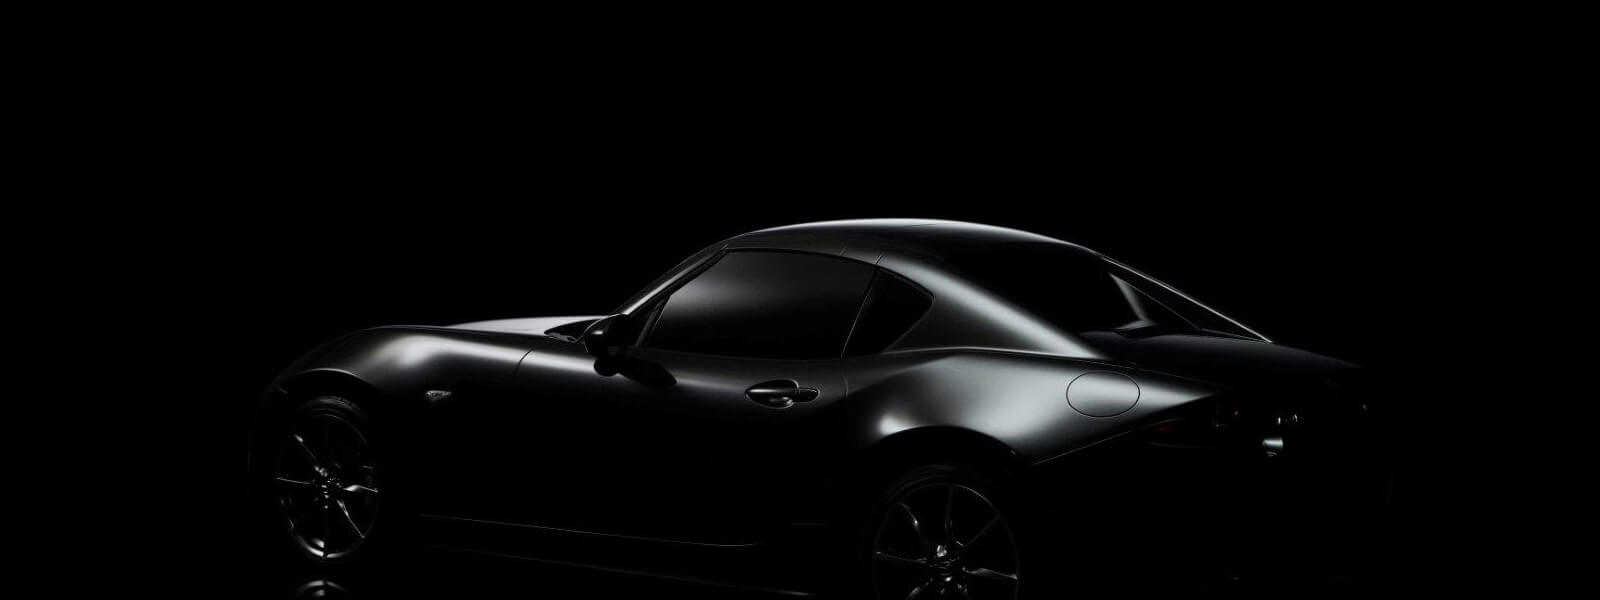 Black Mazda MX-5 RF 2-seat hard-top convertible against a black background.